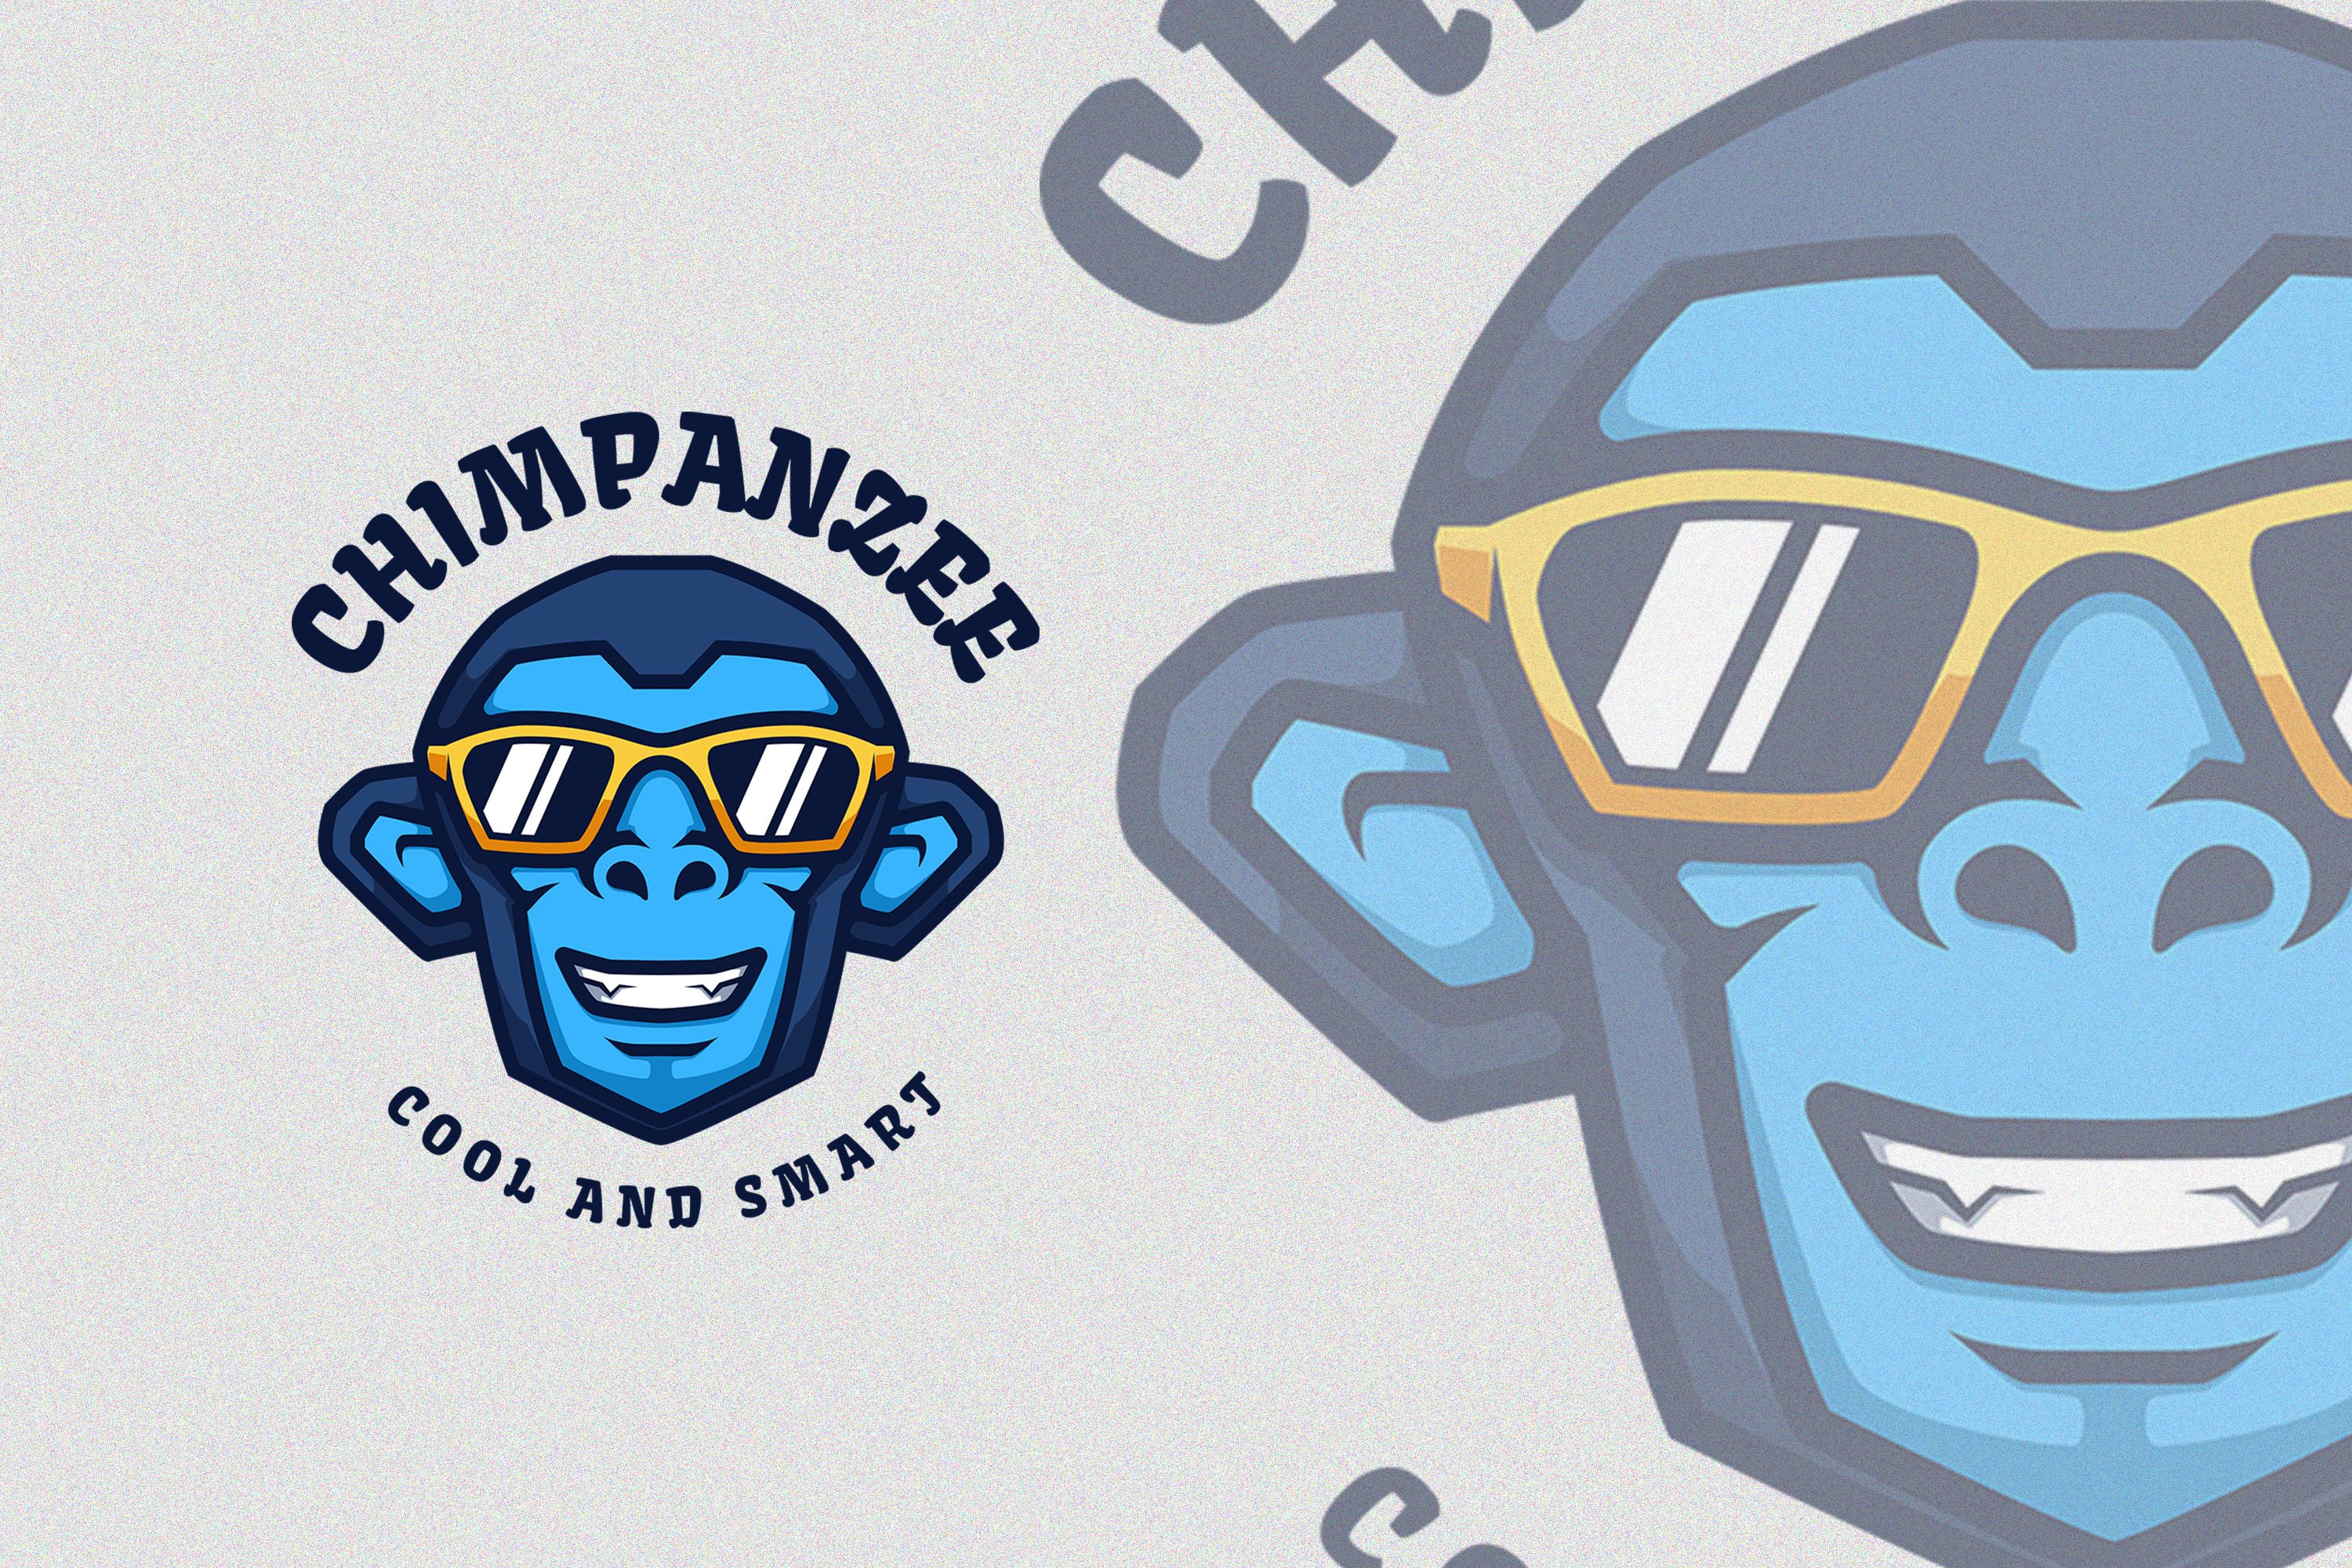 Cool Blue Chimpanzee cover image.